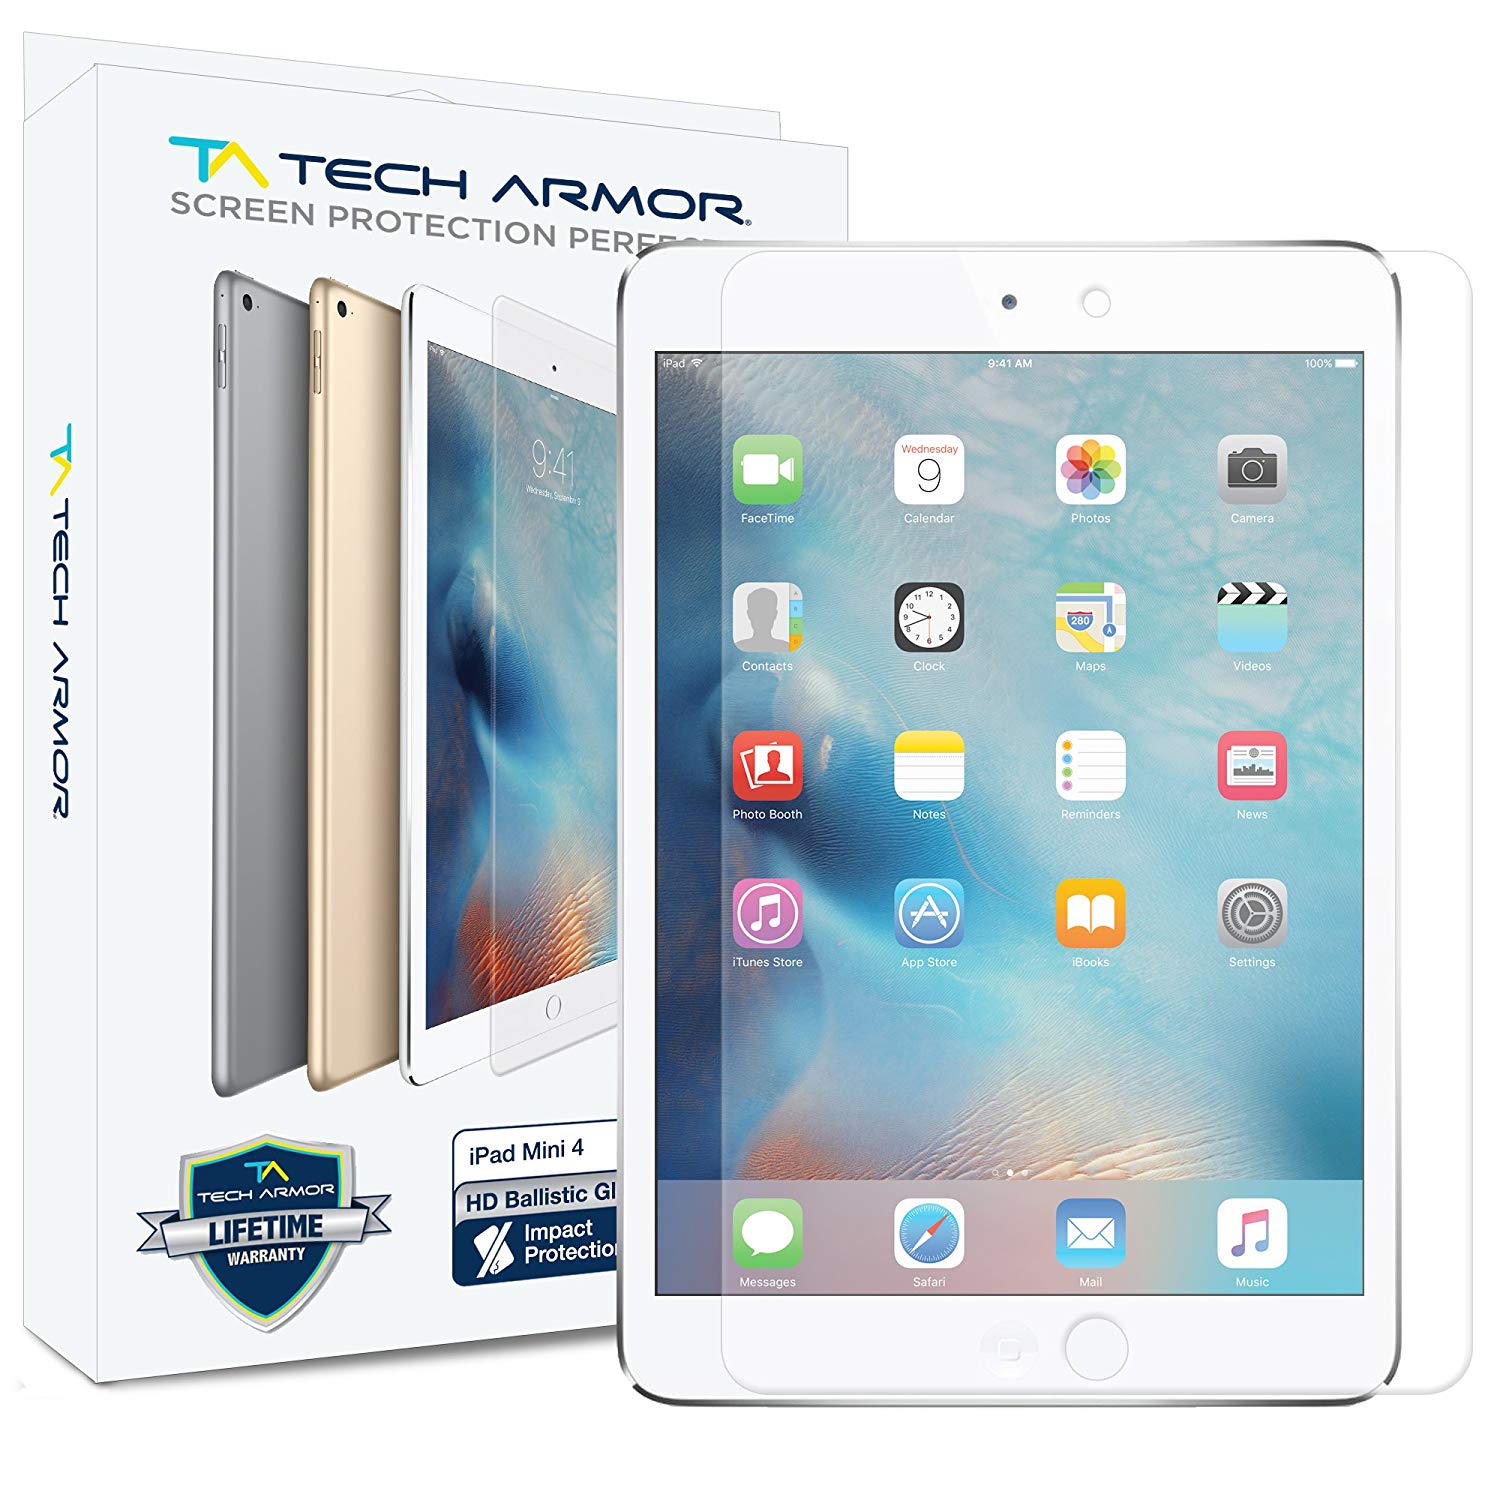 Tech Armor iPad mini screen protectors